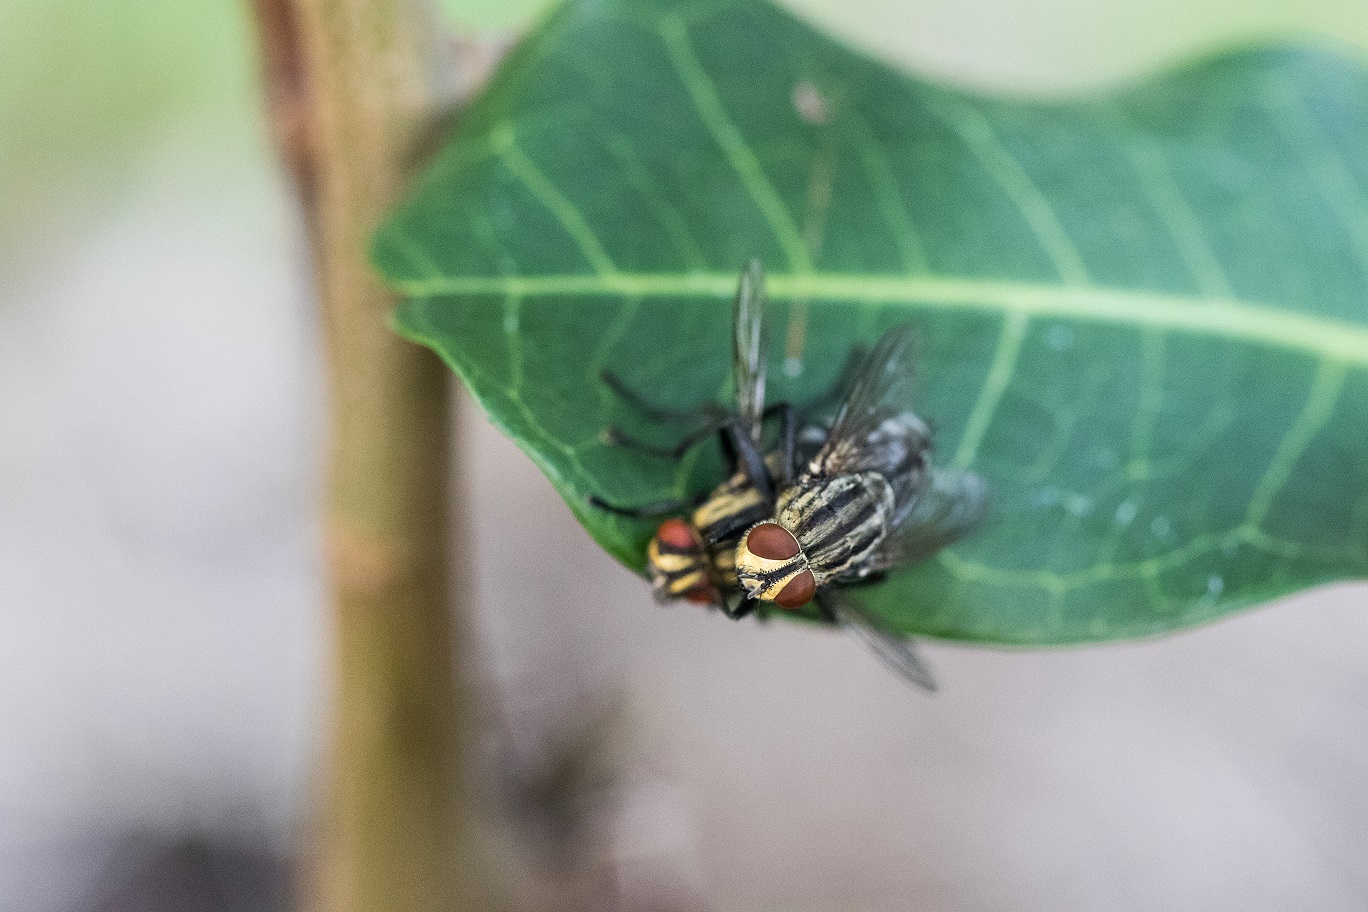 Two flies mating even closer